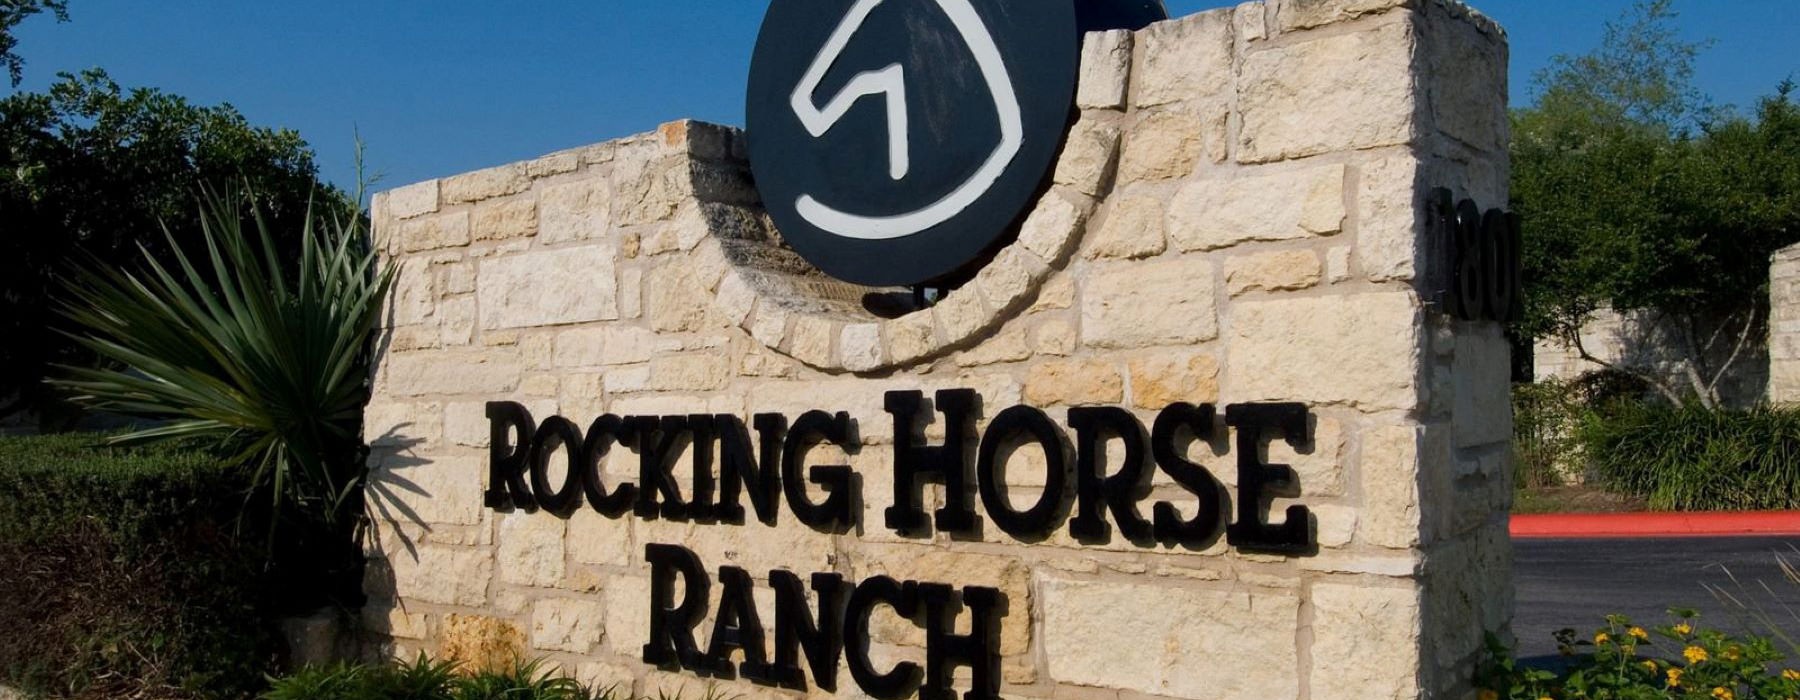 Large stone Rocking Horse Ranch sign at entrance